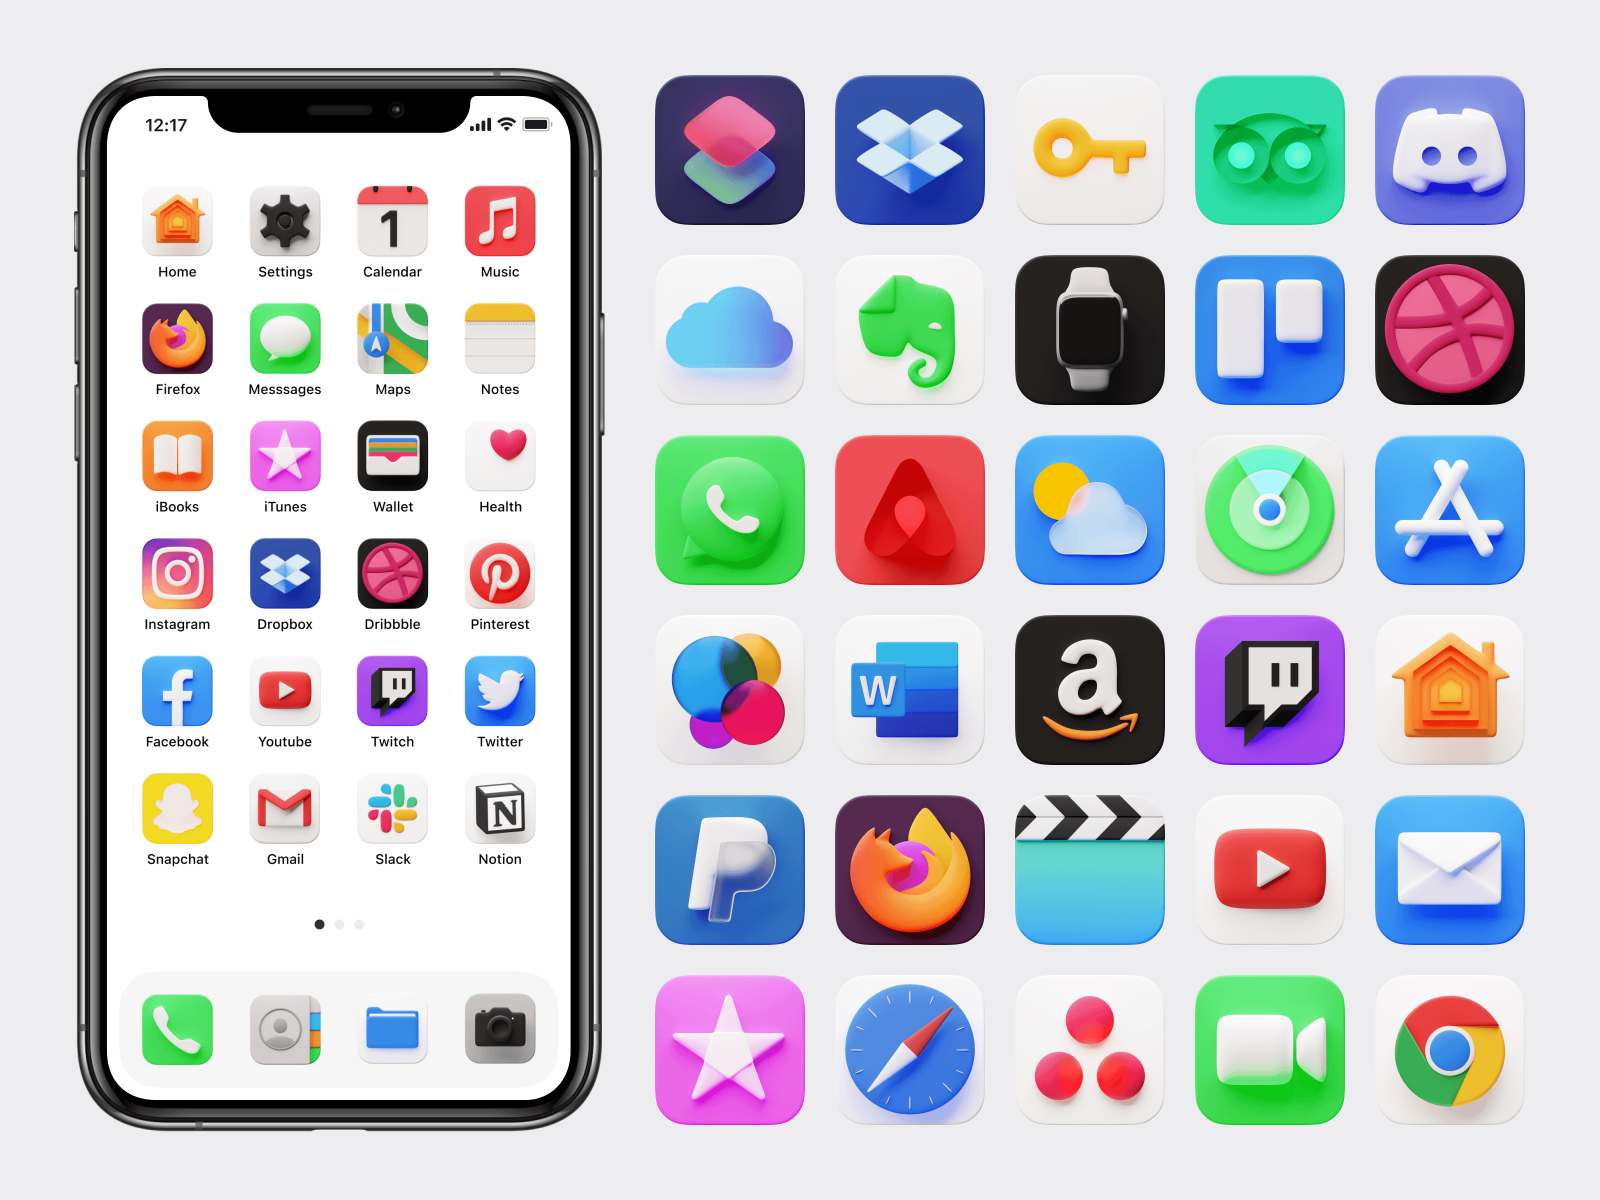 Homescreen icon. Айфон 11 иконки приложений 14 иос. Иконки айфон 12 иос. Иконки для айфона IOS 15. Айфон айос 14.